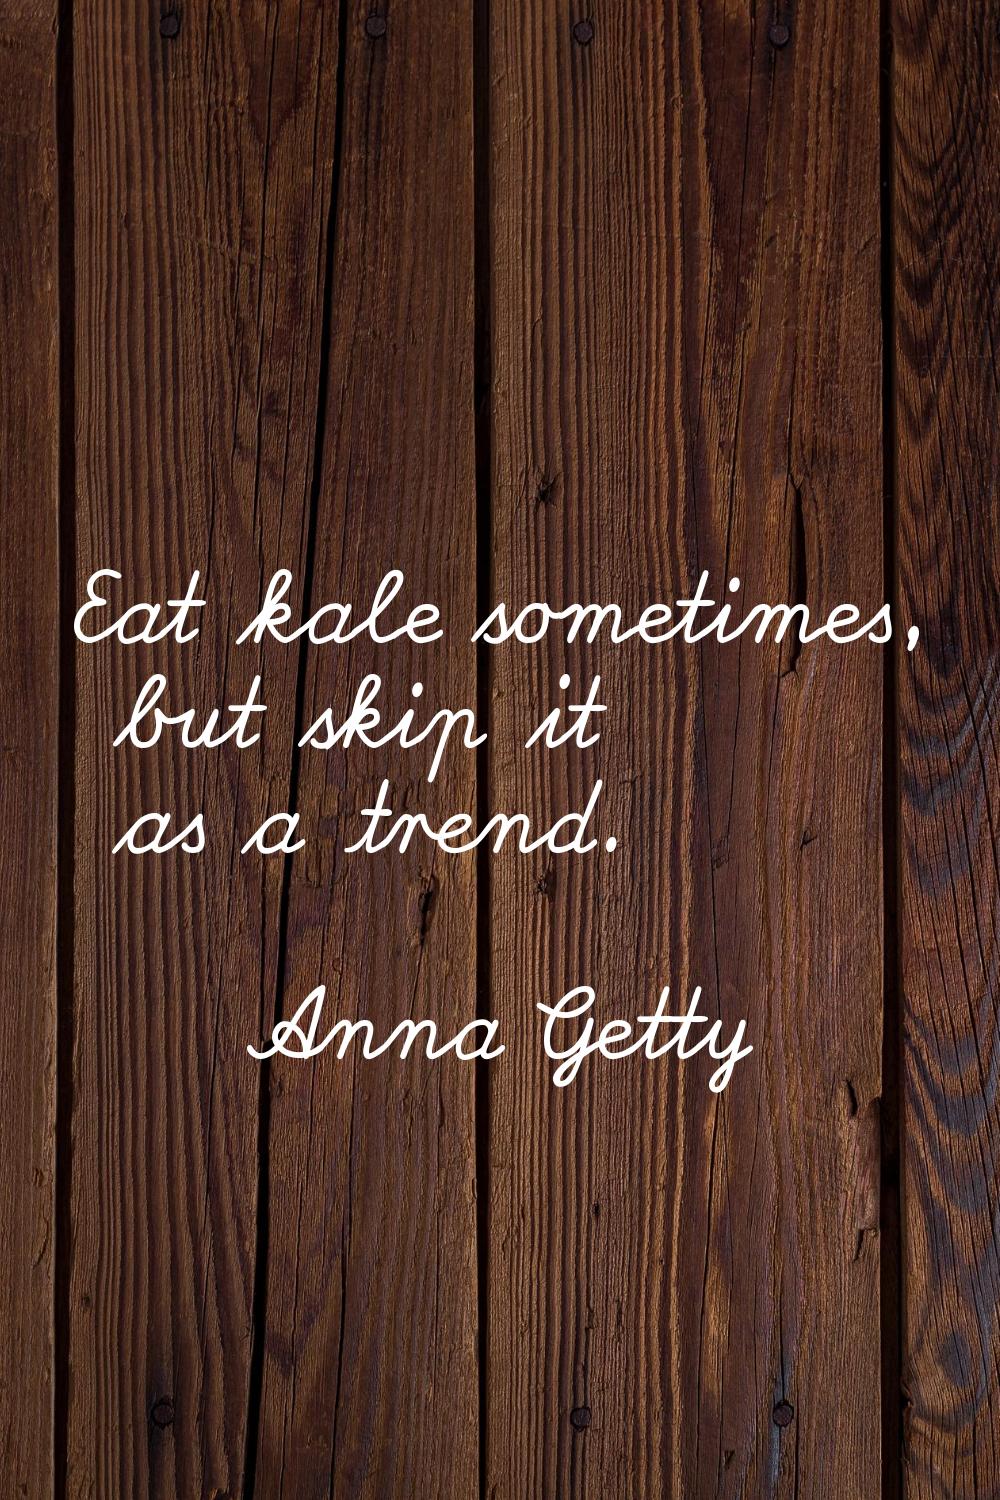 Eat kale sometimes, but skip it as a trend.